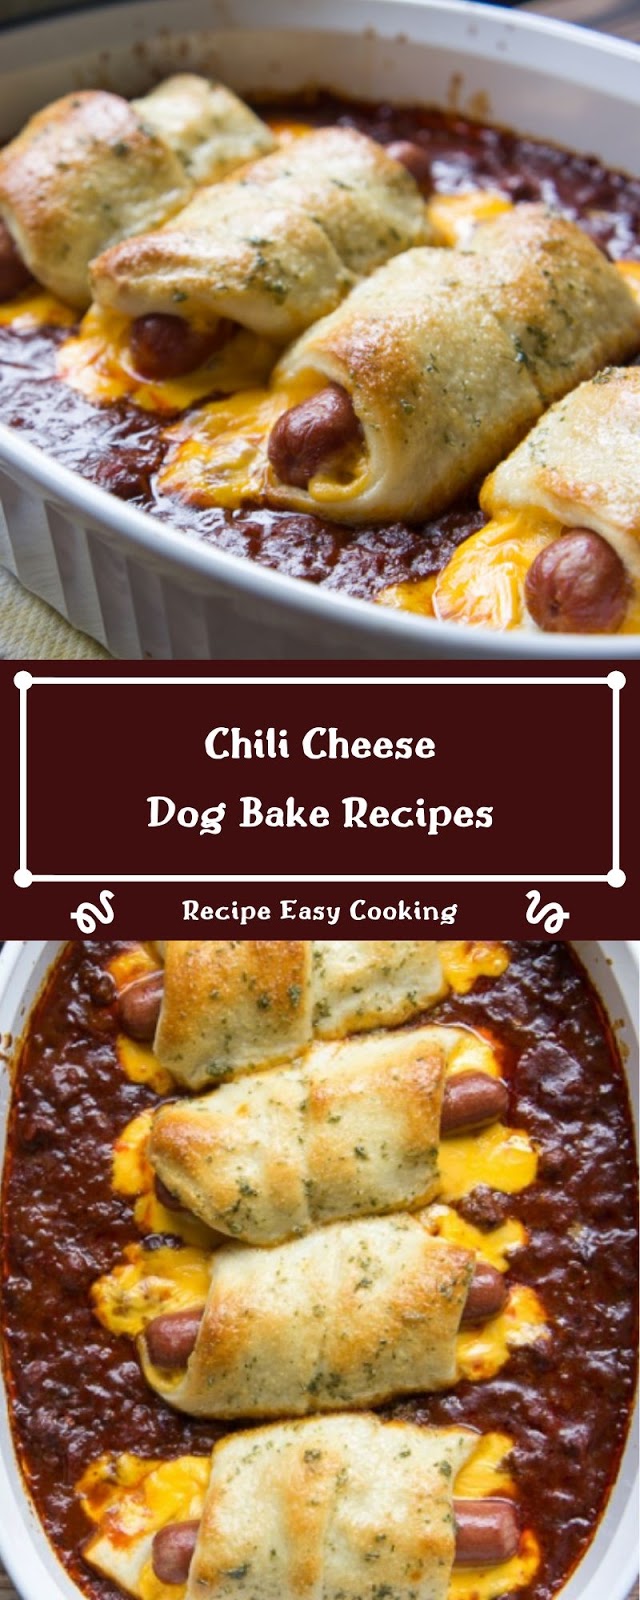 Chili Cheese Dog Bake Recipes